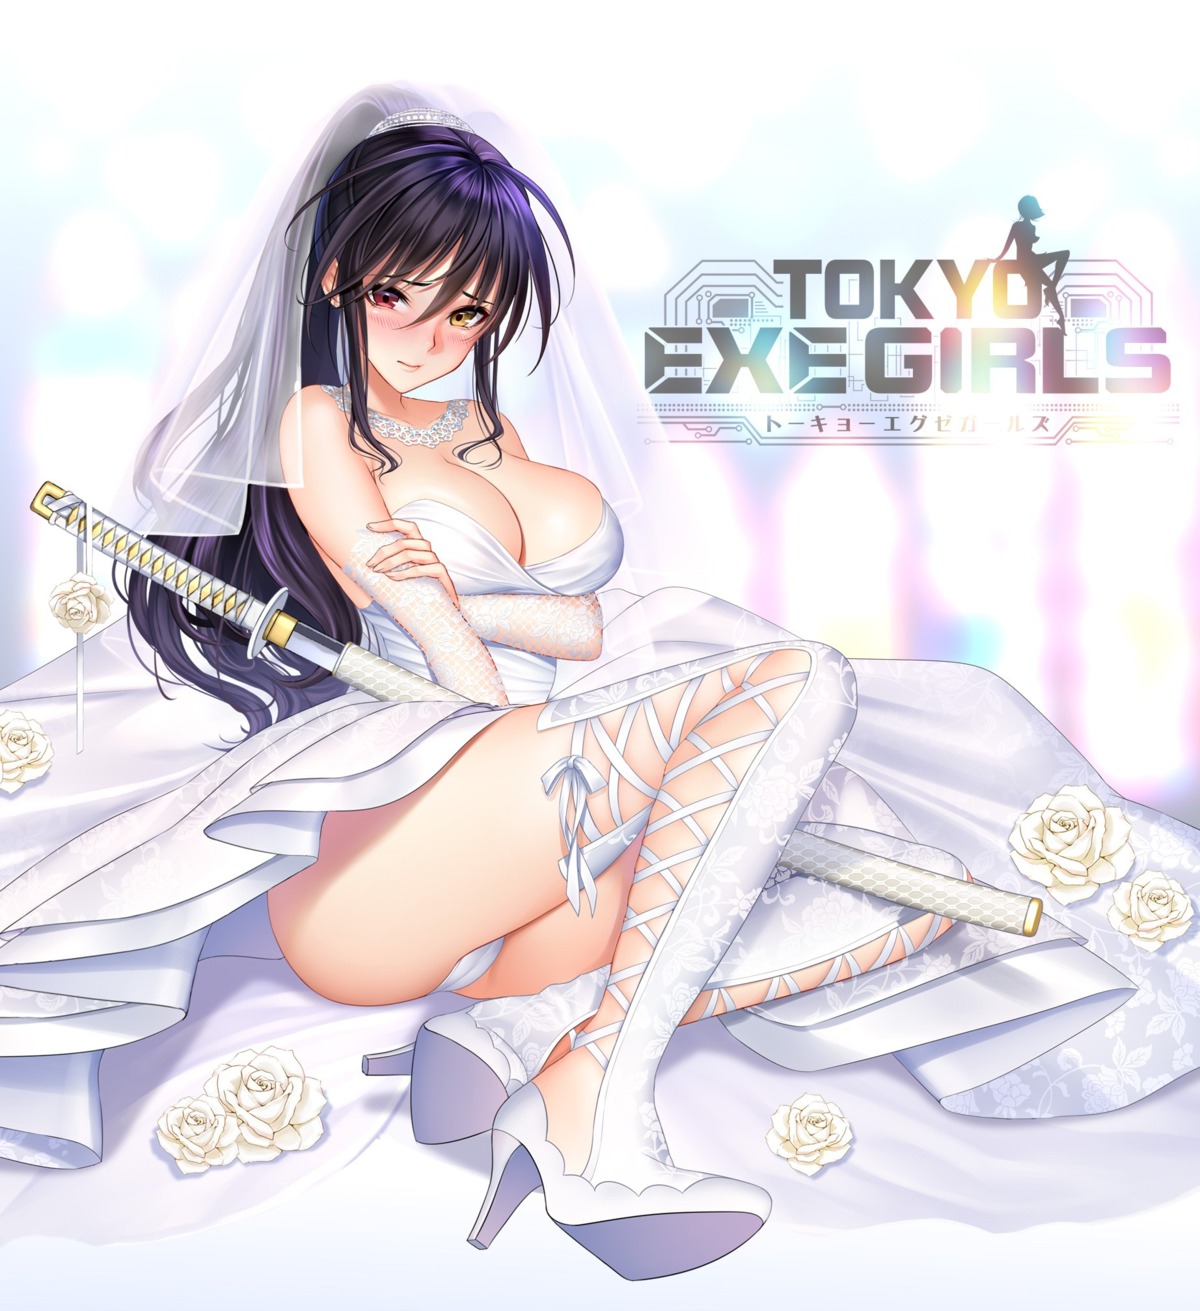 breast_hold cameltoe cleavage dress heterochromia pantsu re:shimashima thighhighs tokyo_exe_girls weapon wedding_dress